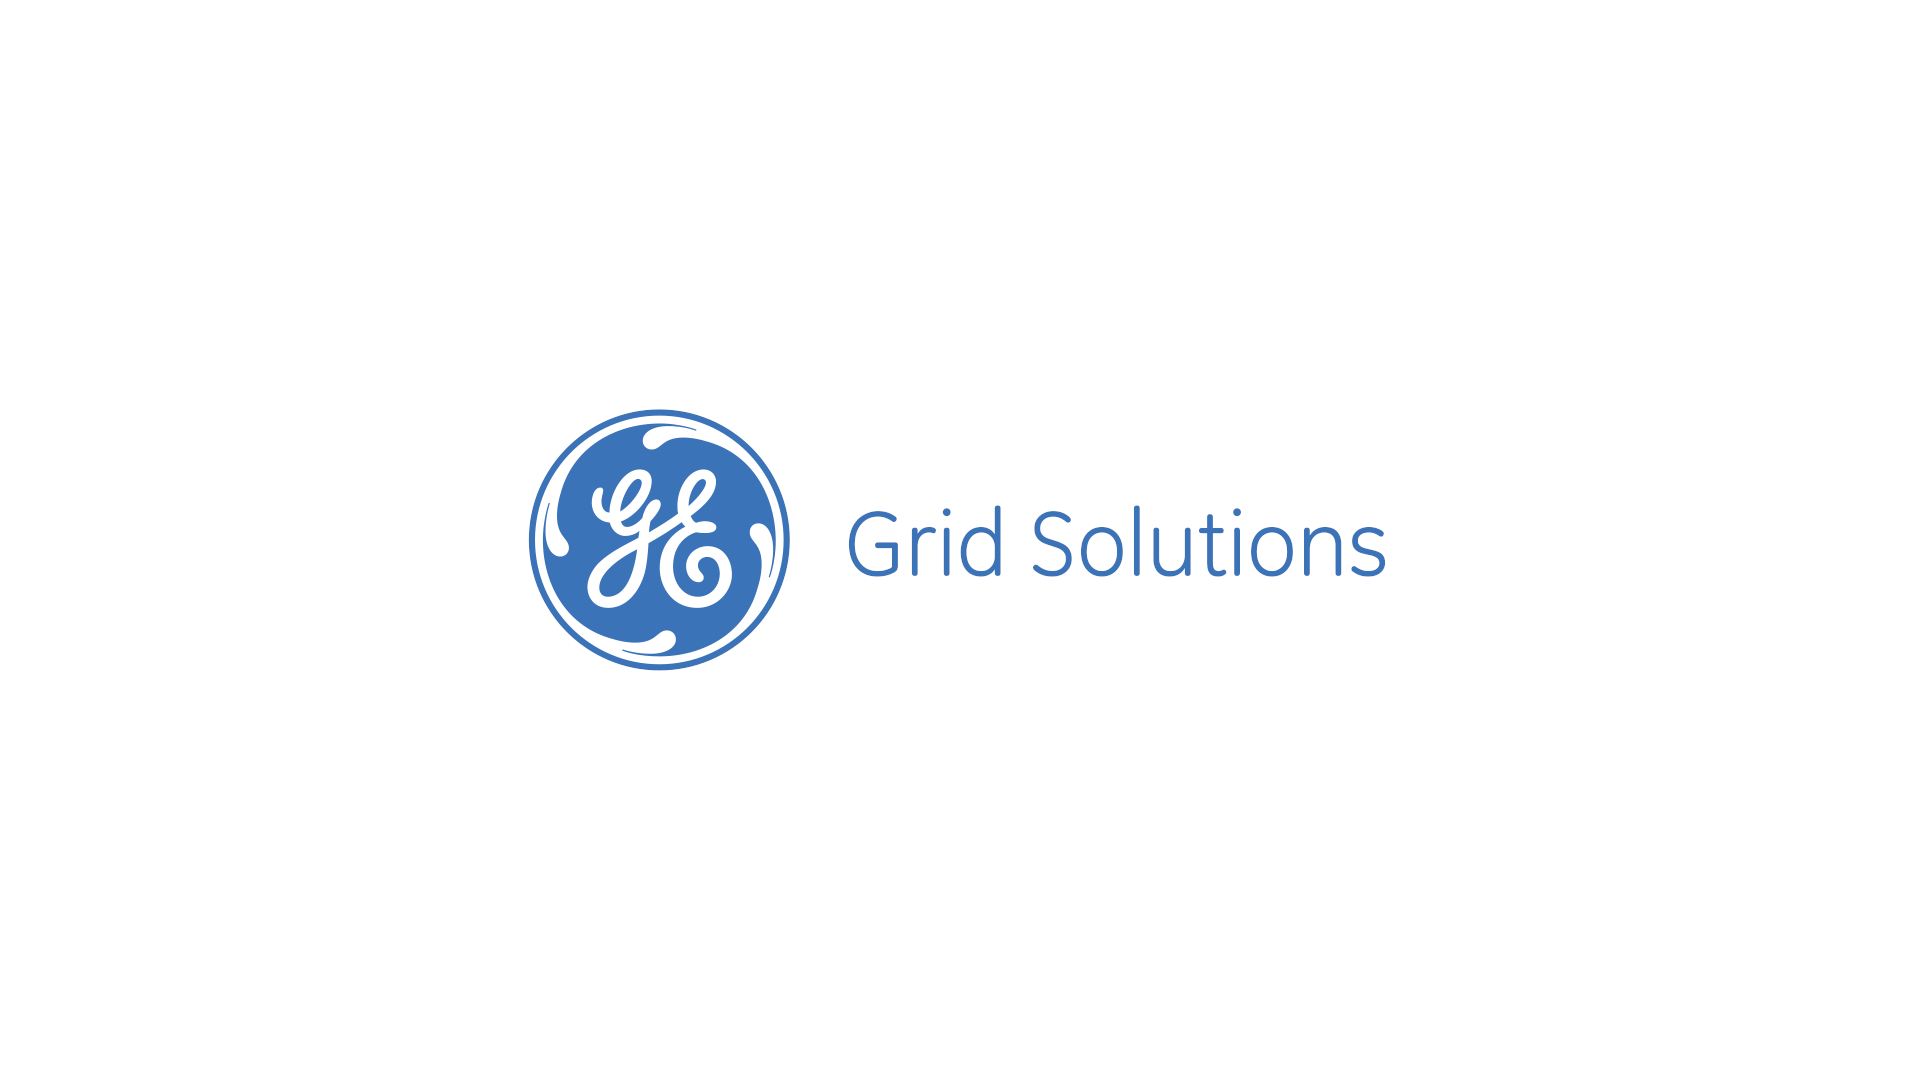 Ge Grid Solutions Ab Swedish Companies Smart City Sweden